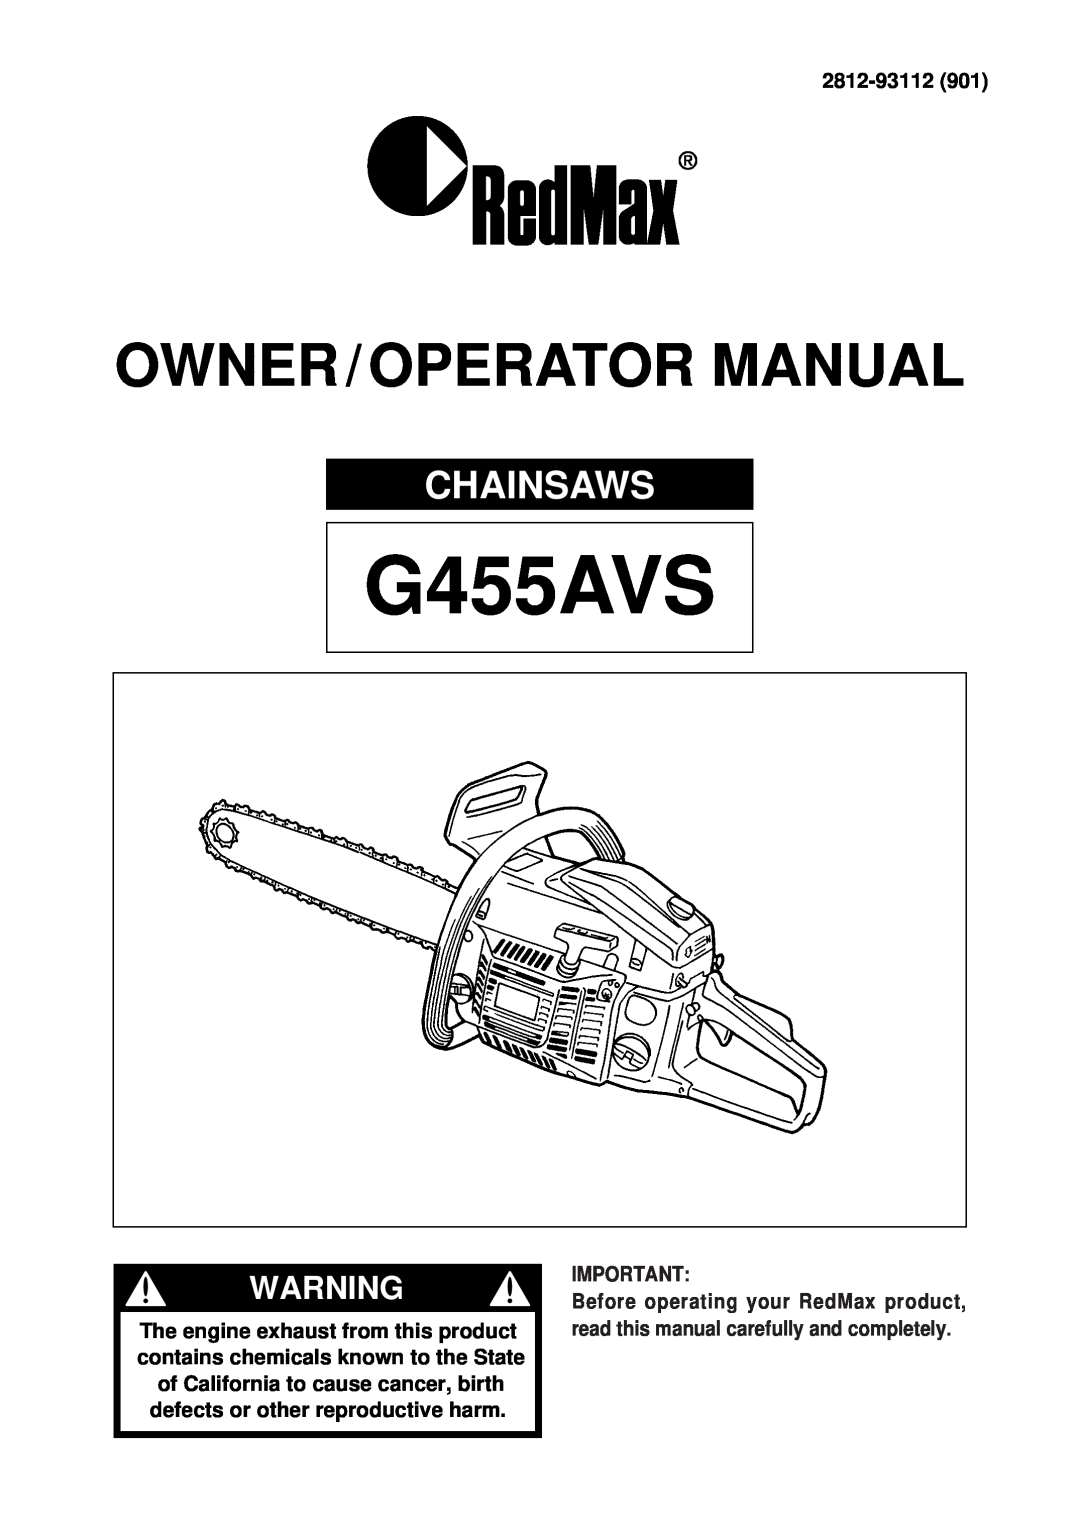 Zenoah G455AVS manual Chainsaws, Owner / Operator Manual, 2812-93112 